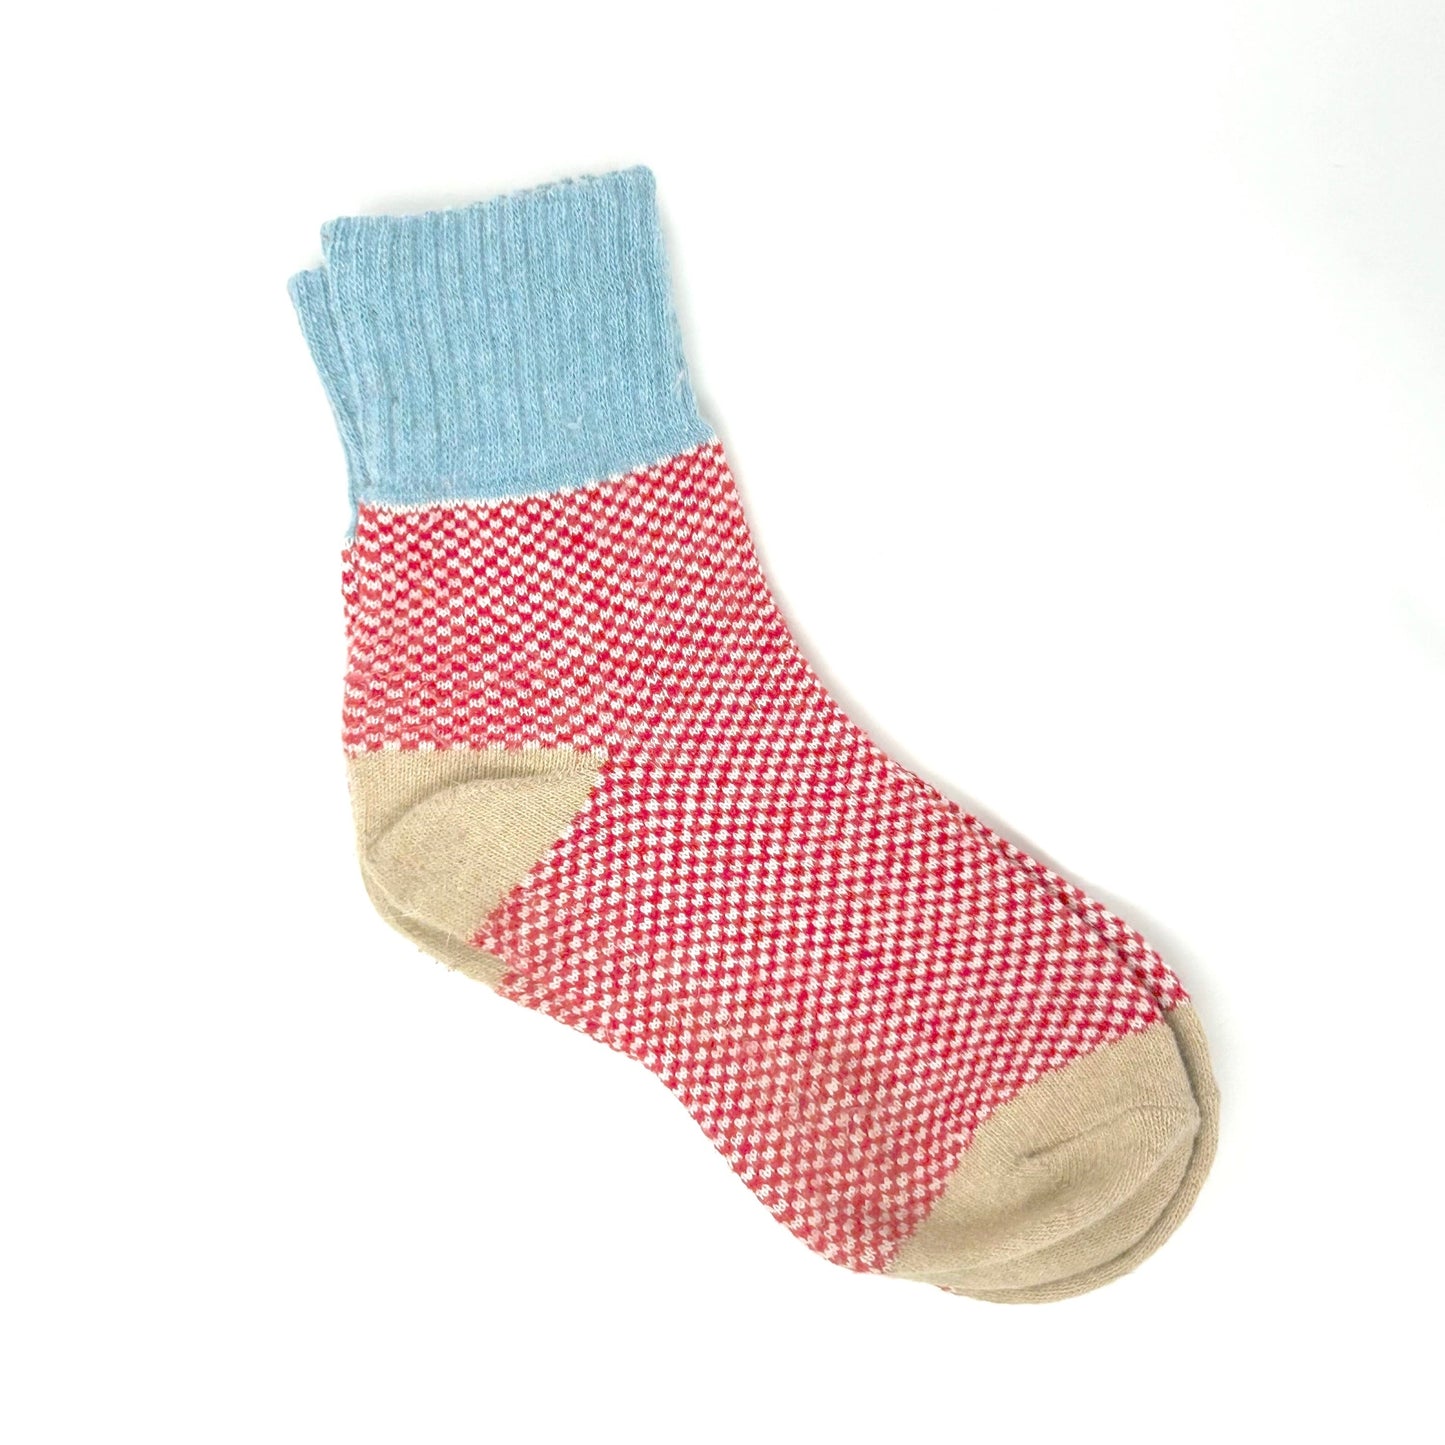 Red & blue wool socks